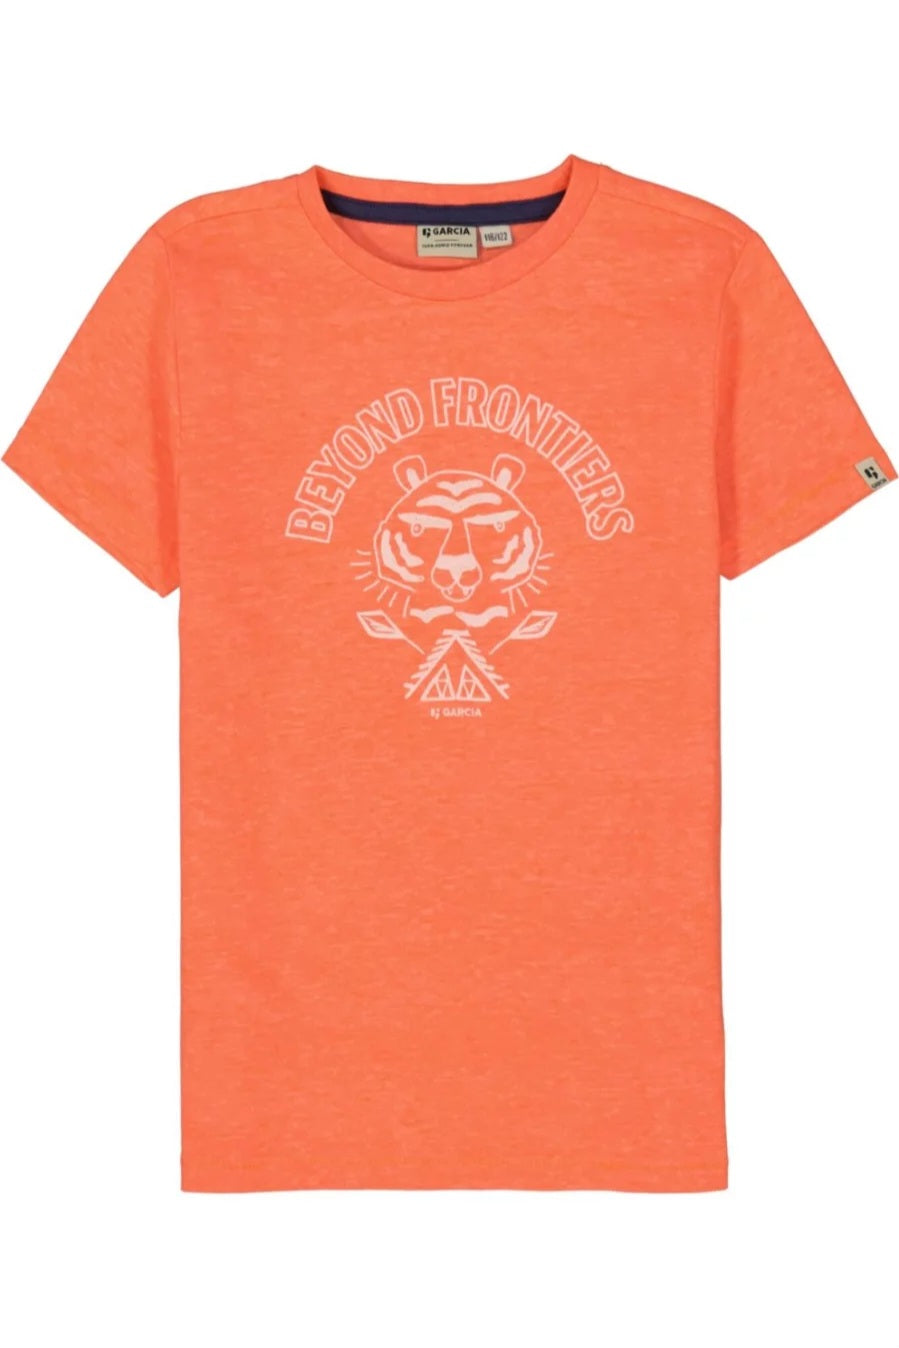 T-Shirt Sona Orange Fluo (9201385603397)